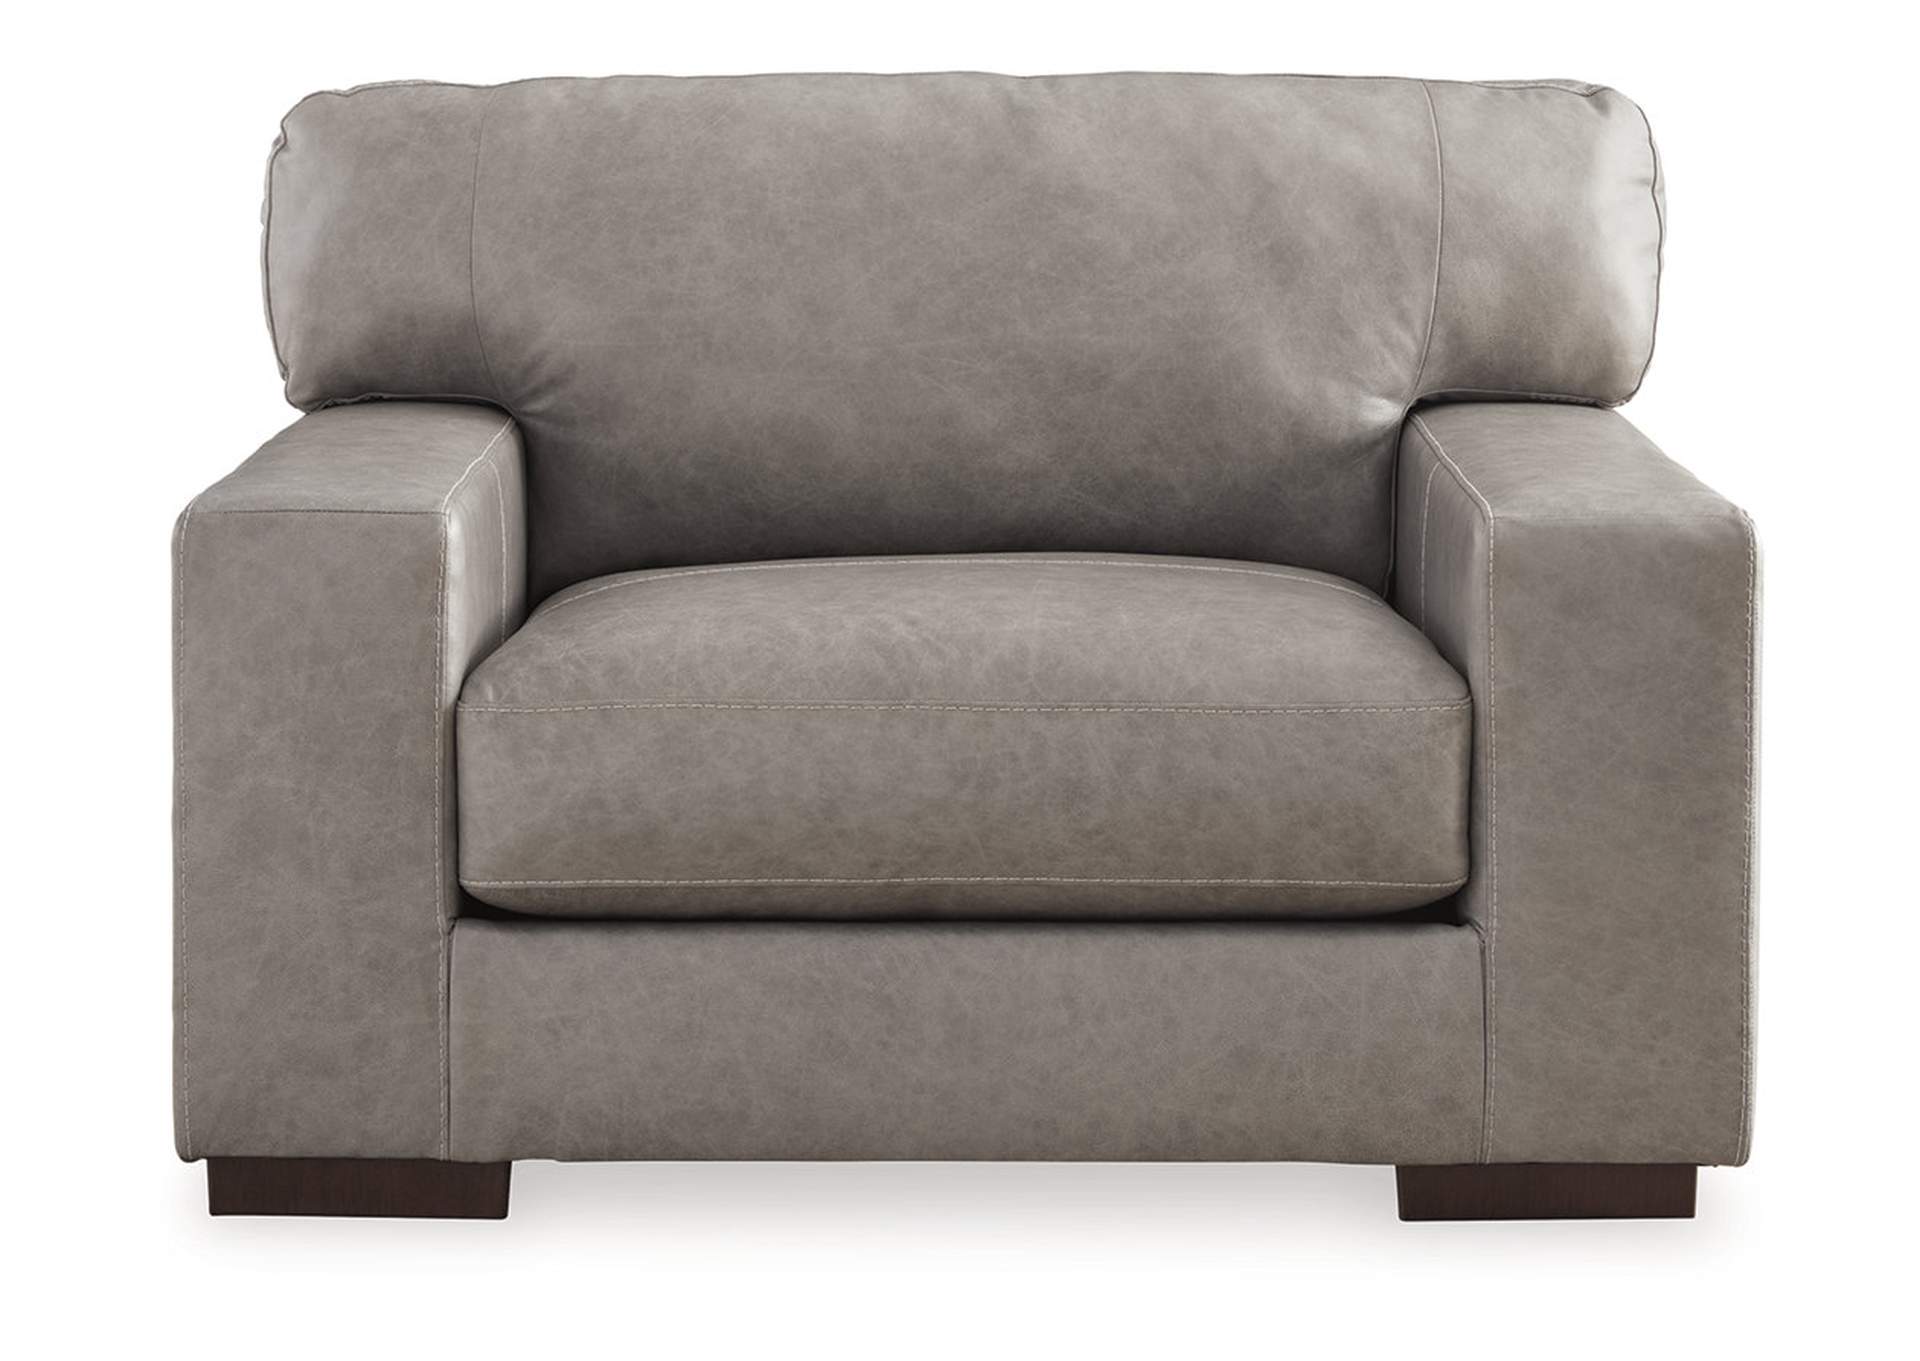 Lombardia Sofa, Loveseat, Chair and Ottoman,Millennium